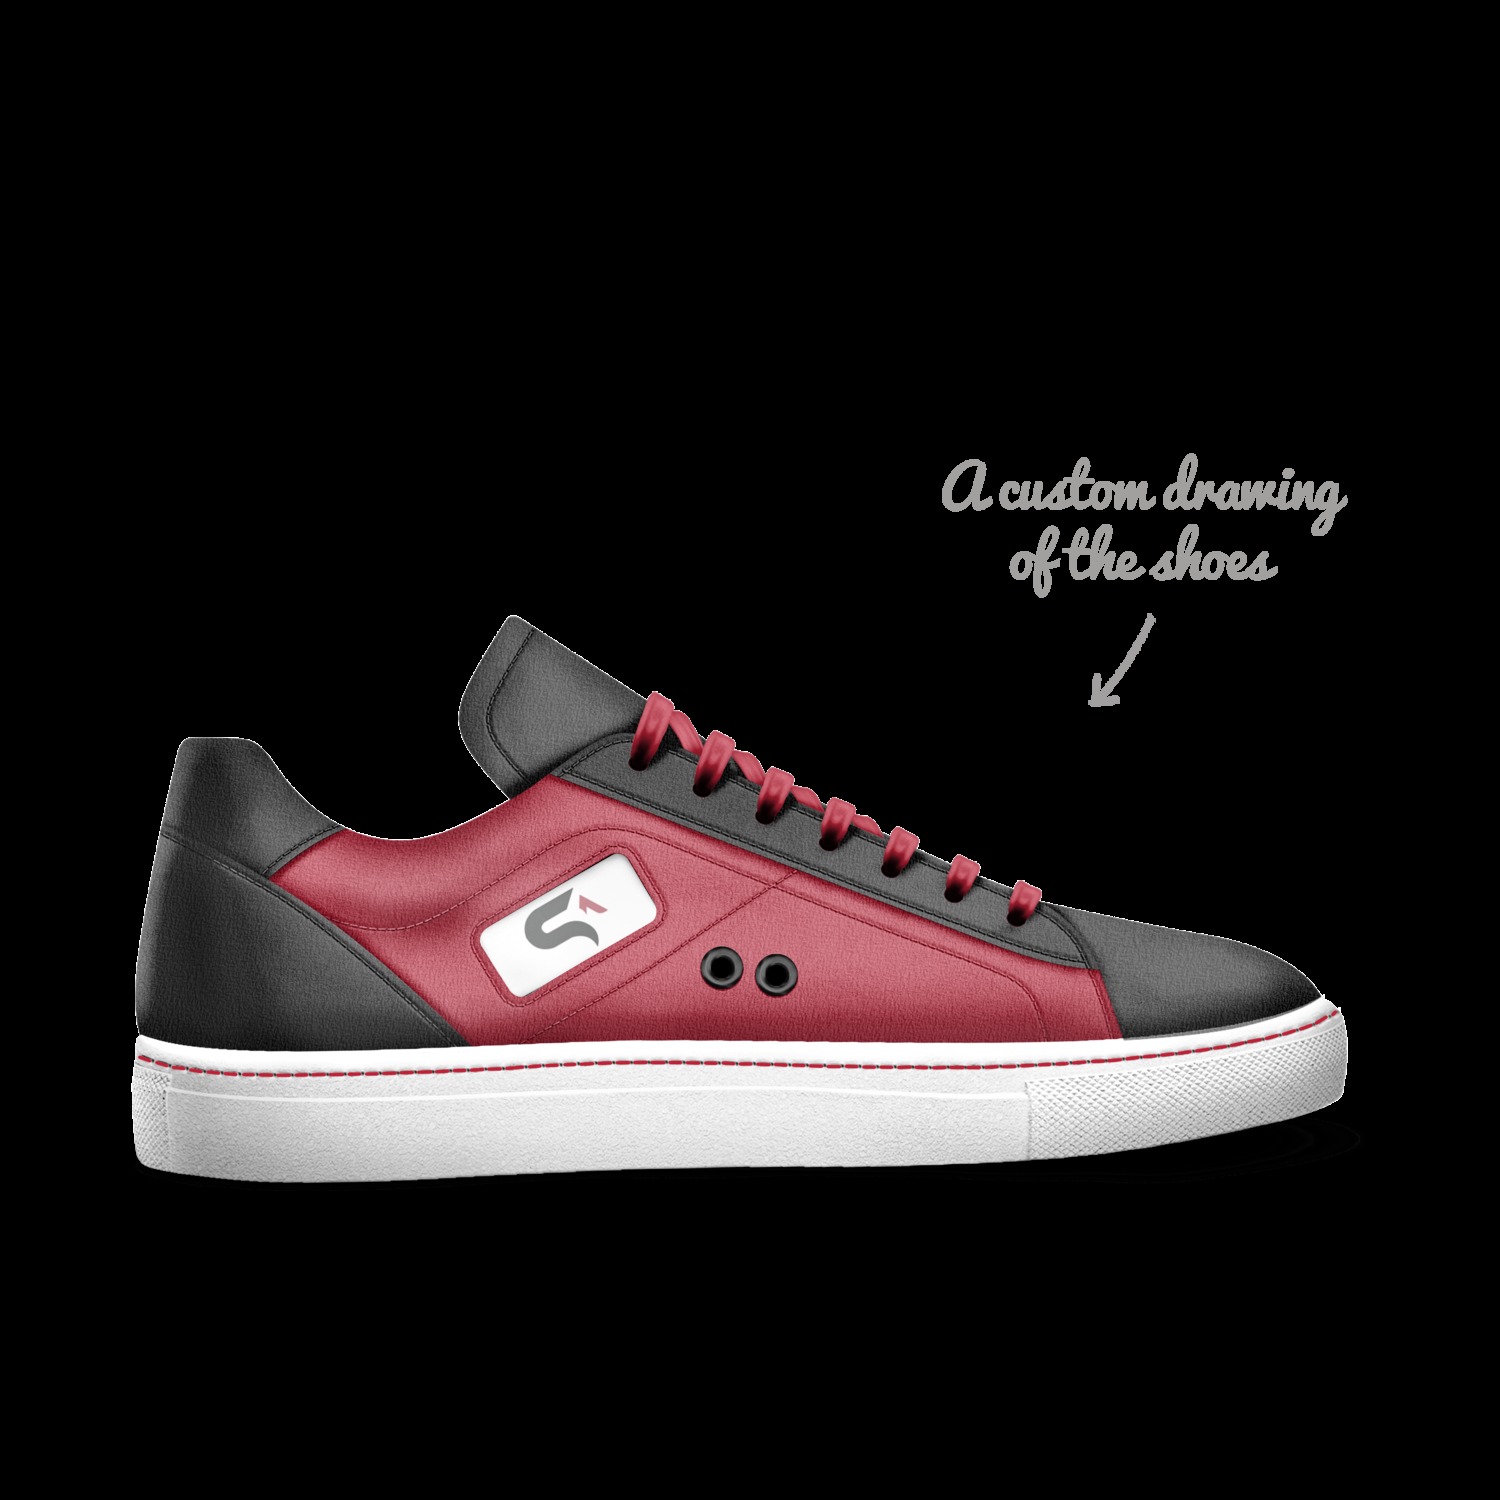 stylish and nice | A Custom Shoe 